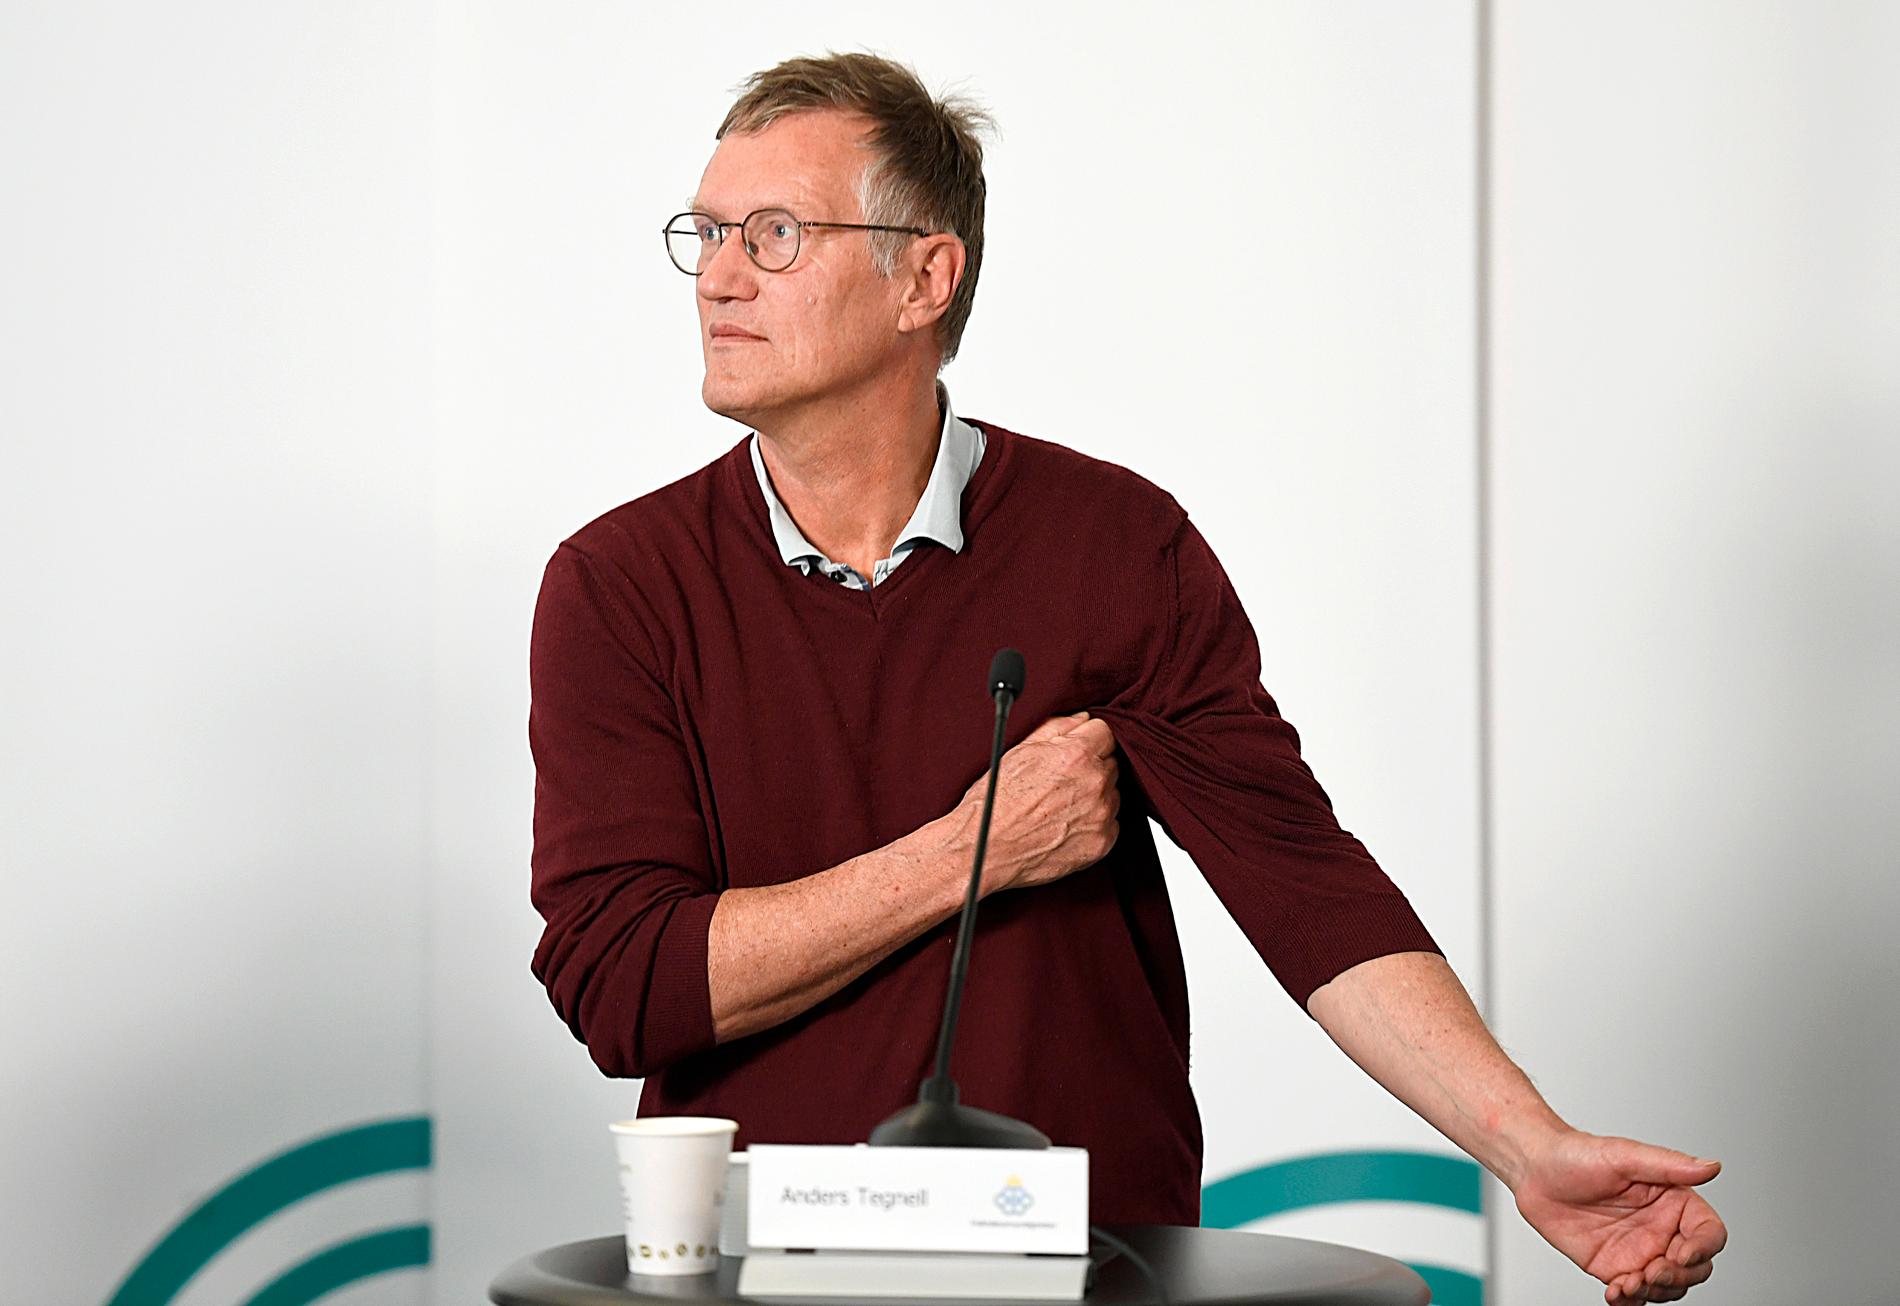 Statsepedemiolog Anders Tegnell